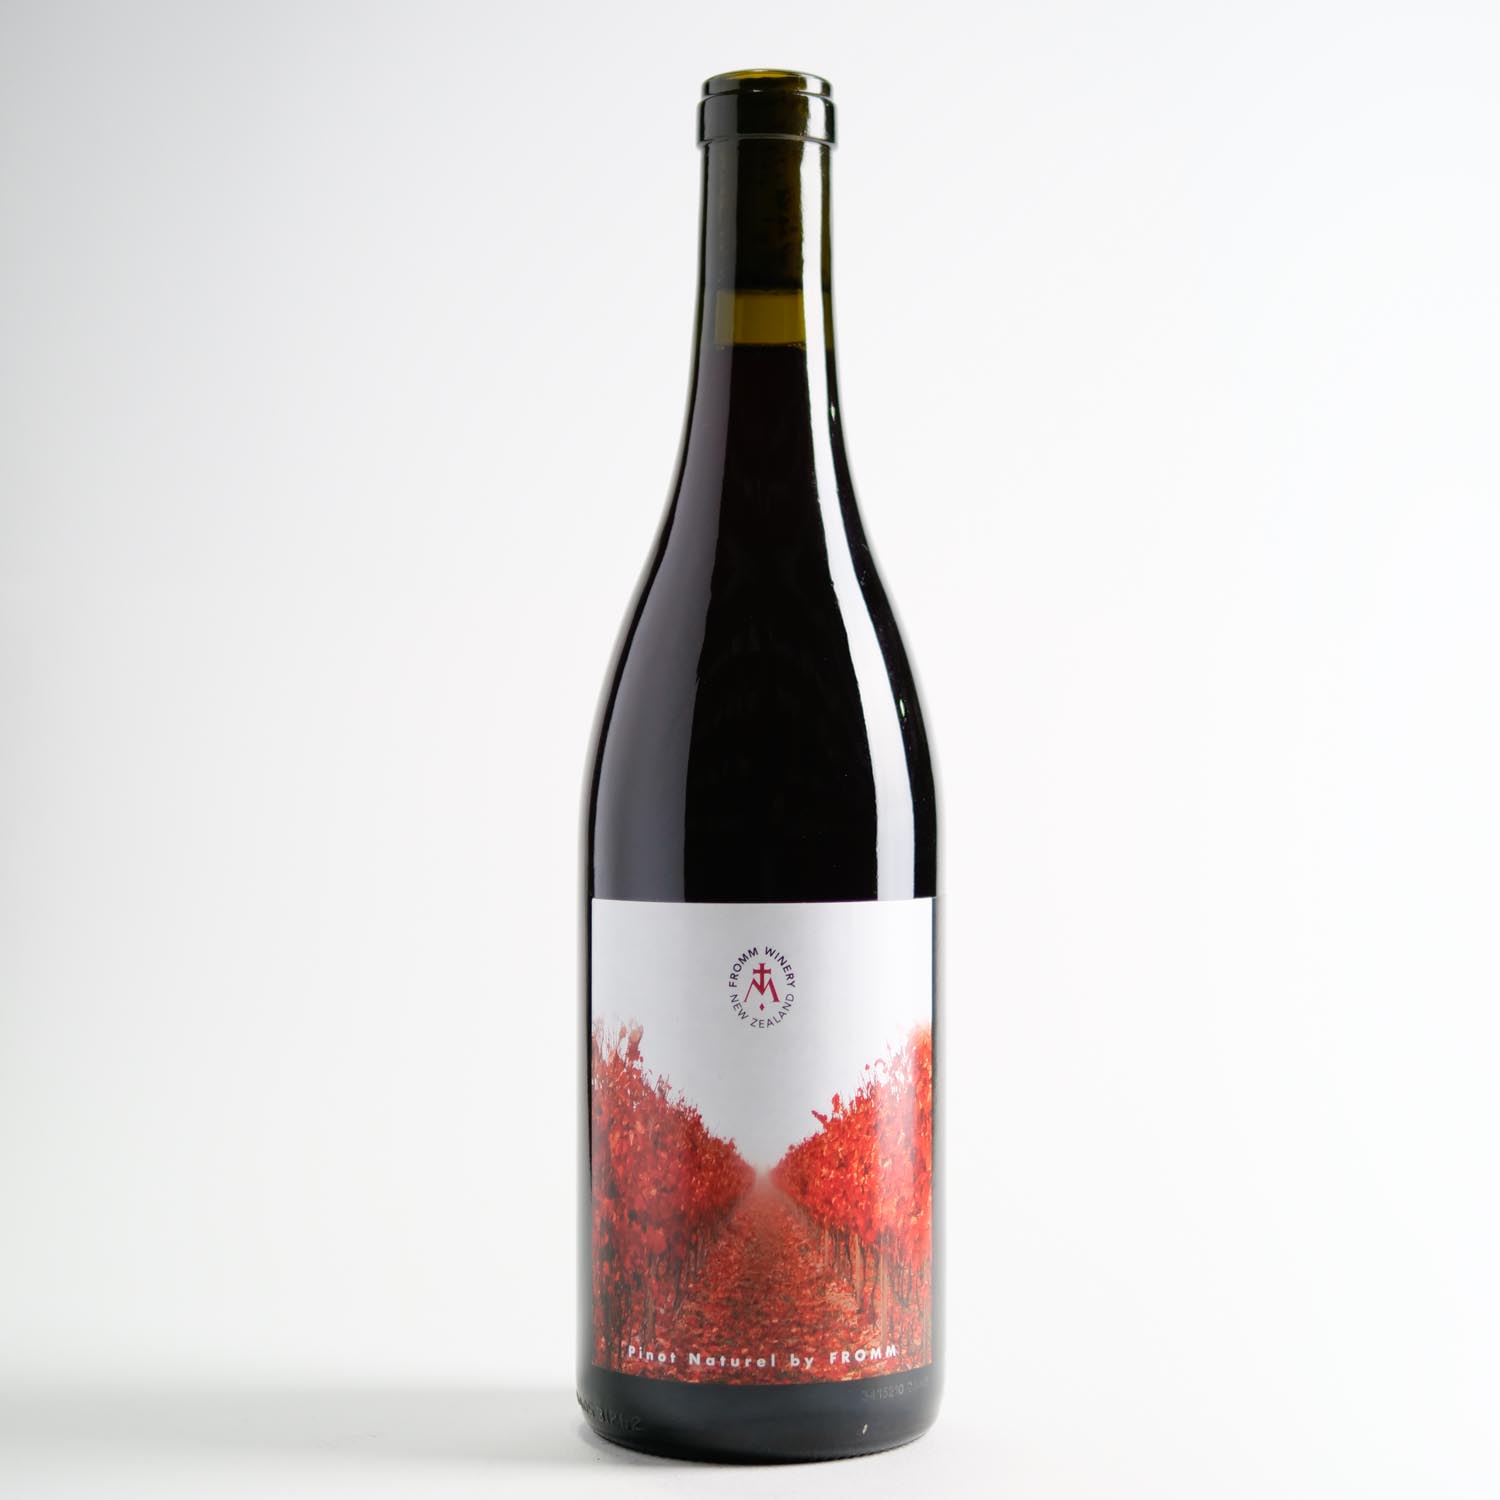 Fromm Vineyard Pinot Naturel 2018